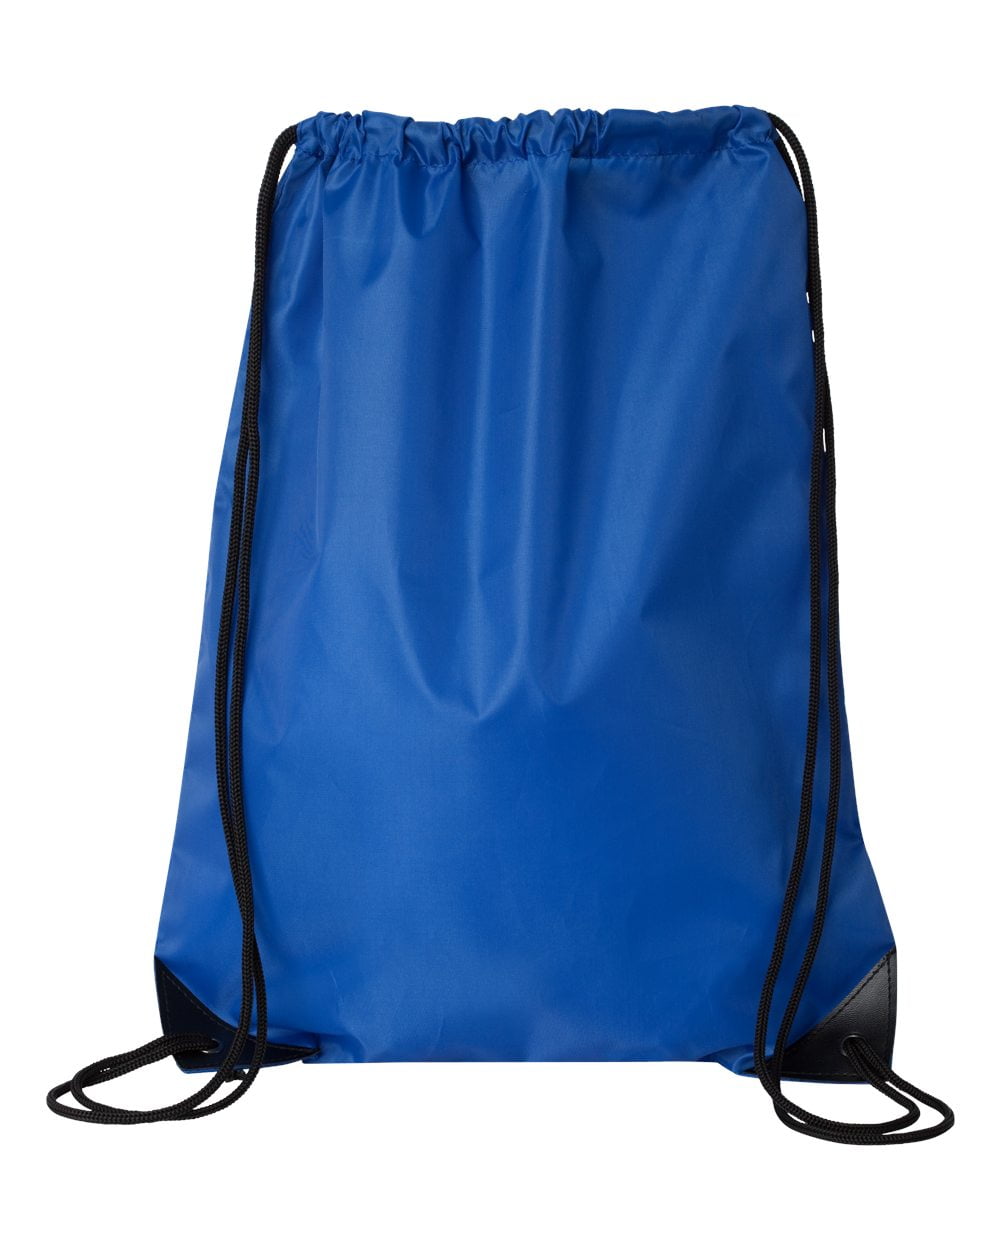 Liberty String Drawstring Backpack Tote Cinch Sack School Bag Sport Bookbag US 